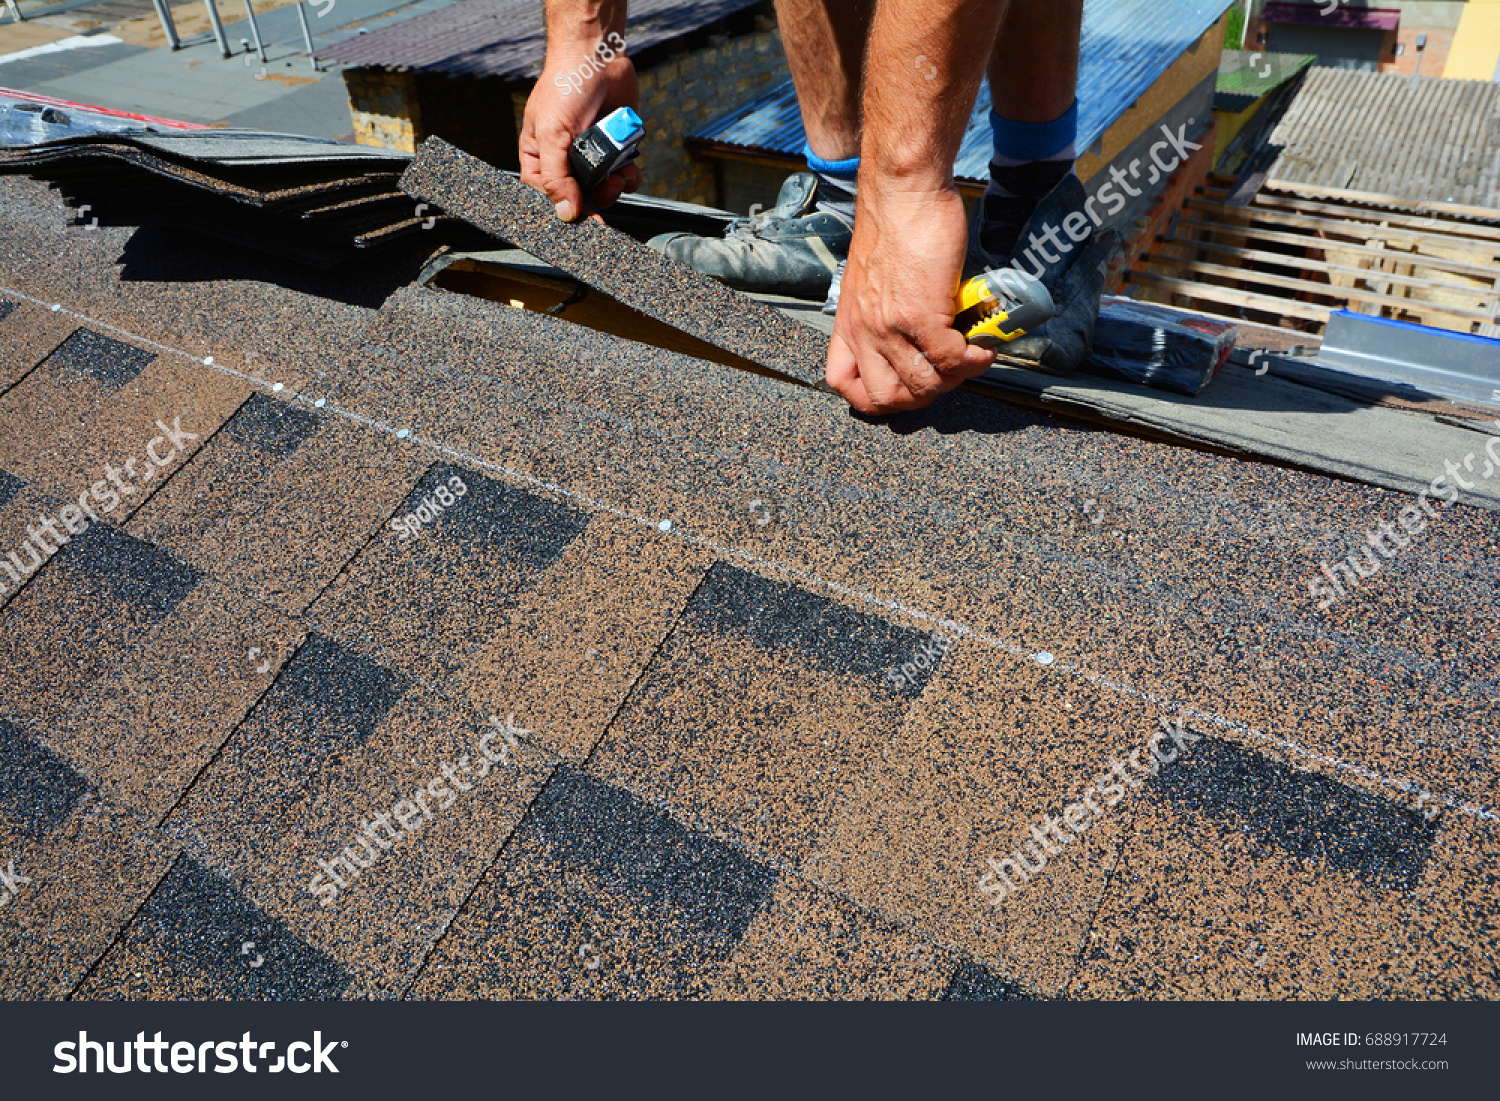 Repairing of roof by cutting felt or bitumen shingles during waterproofing works. #688917724